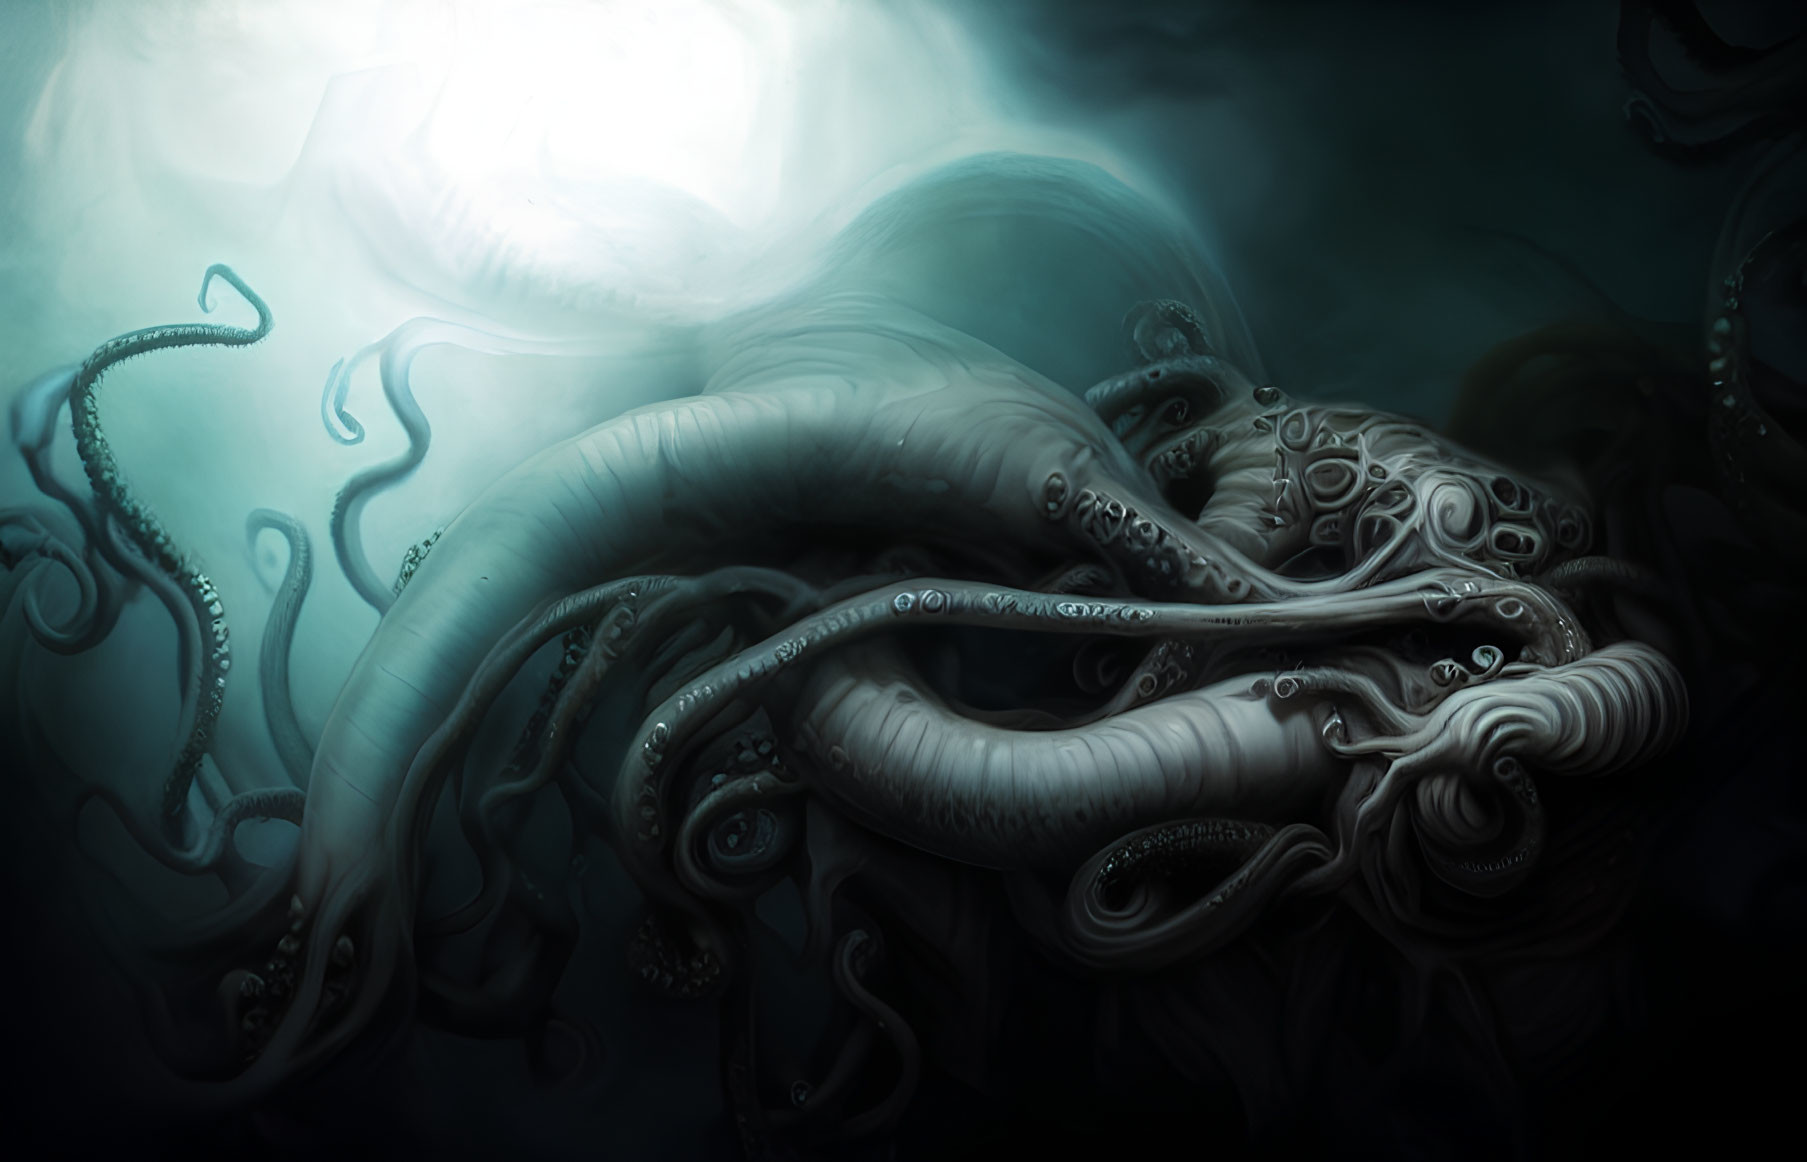 Intricately detailed octopus-like creature in dark underwater scene